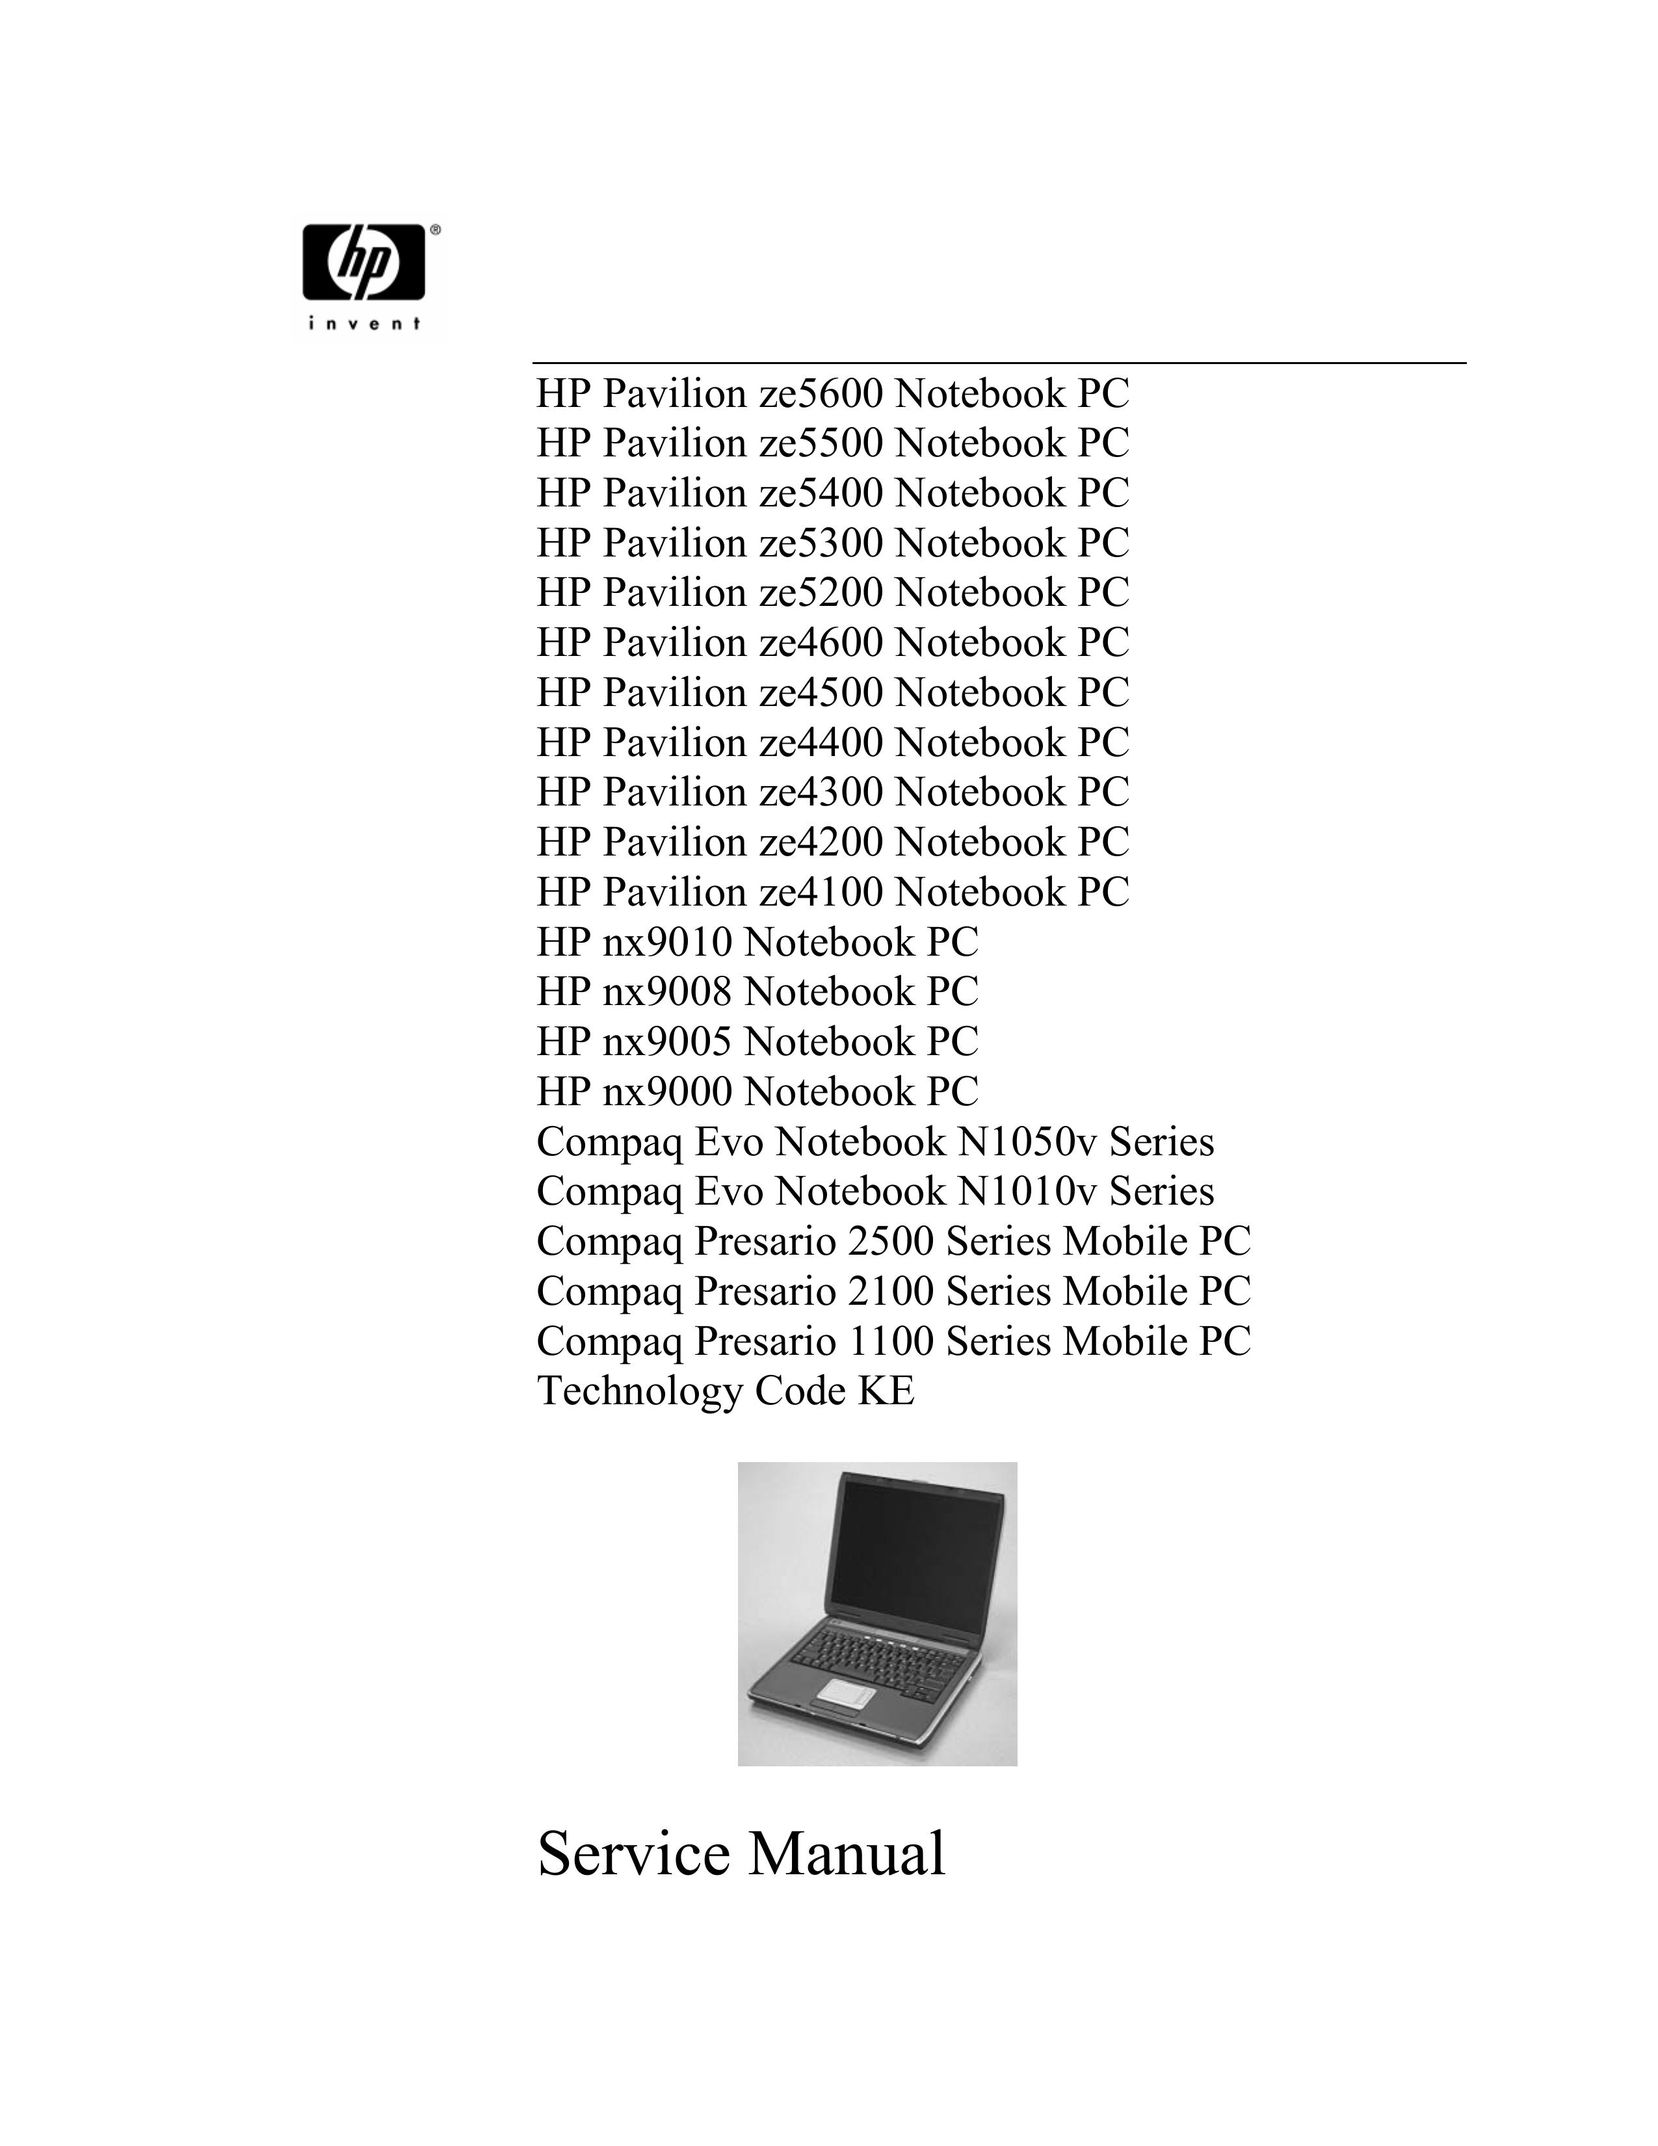 HP (Hewlett-Packard) NX9000 Tablet Accessory User Manual